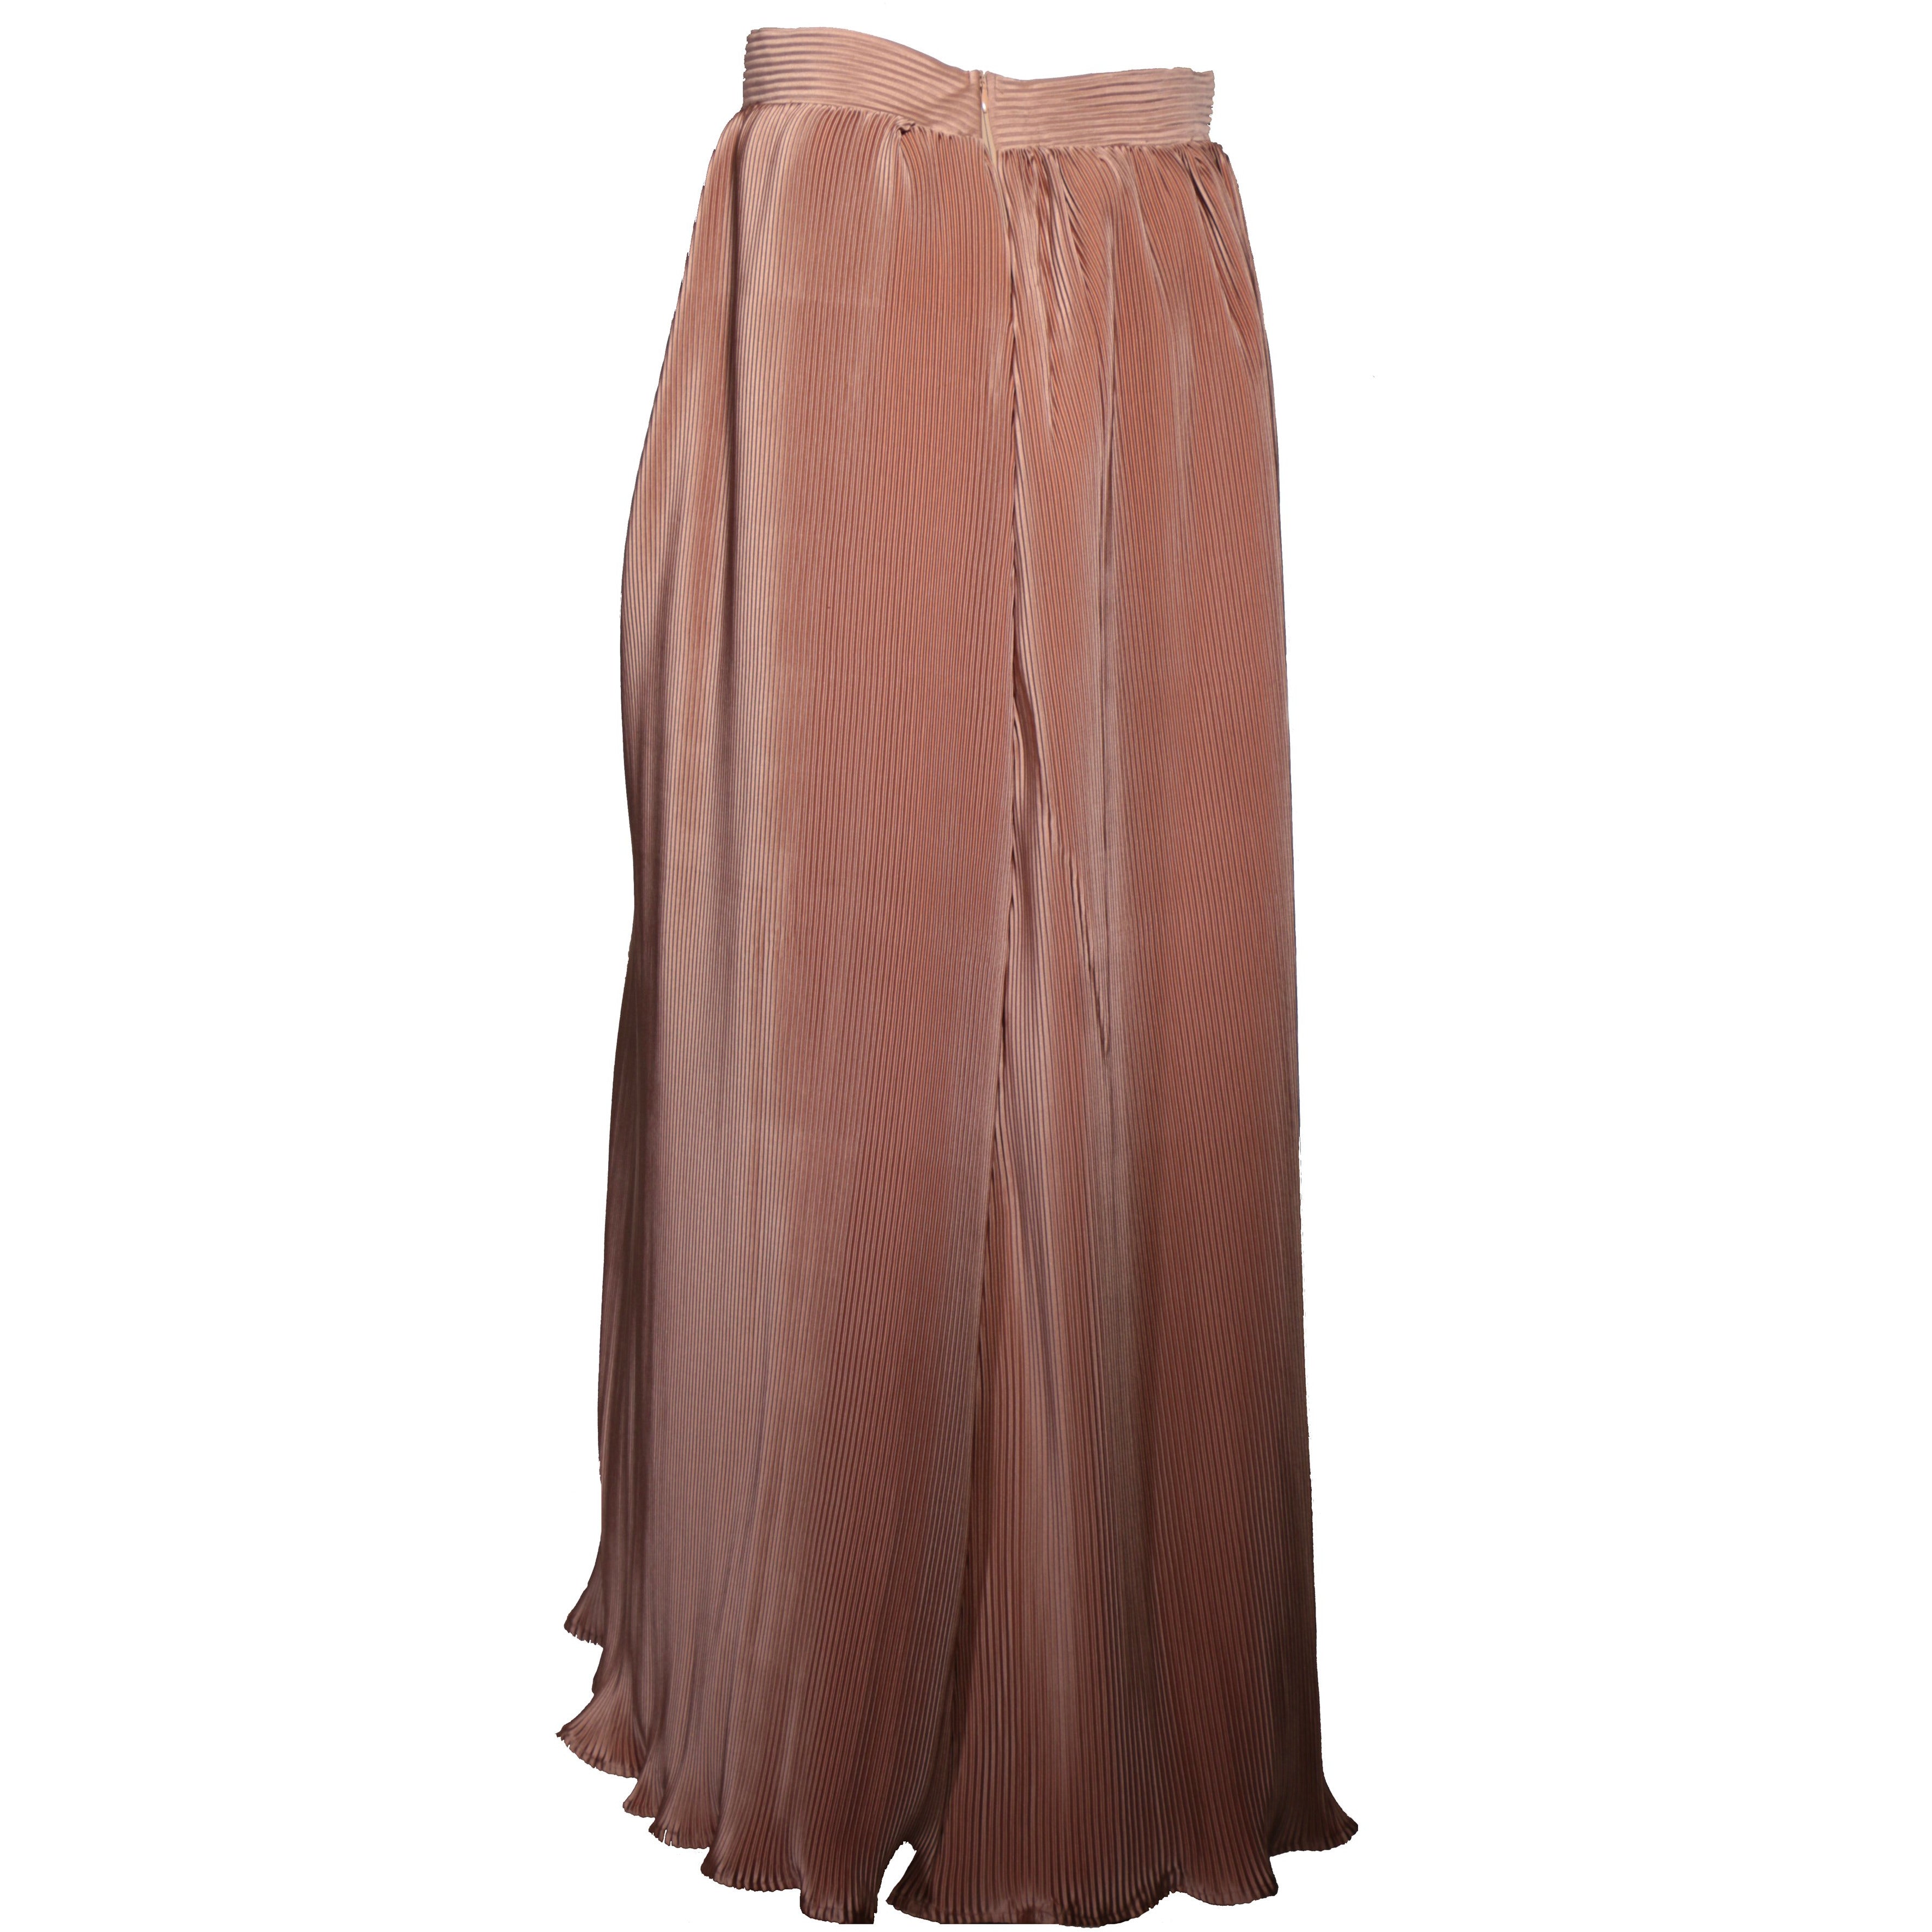 Tan long pleated skirt